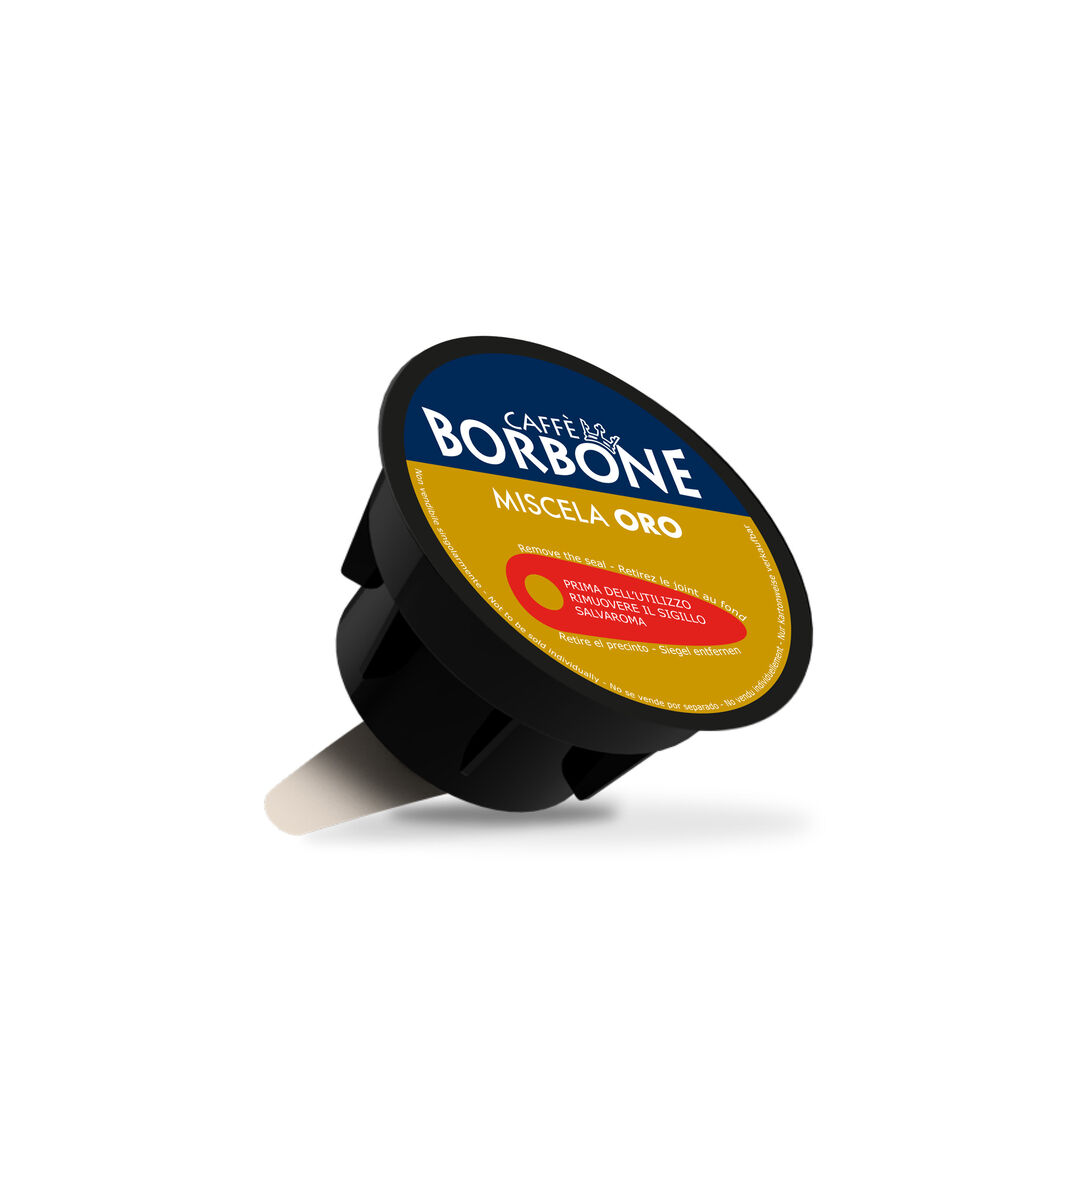 90 Borbone DolceRE GOLD Capsules Compatible with Nescafé®* Dolce Gusto®*  brand machines